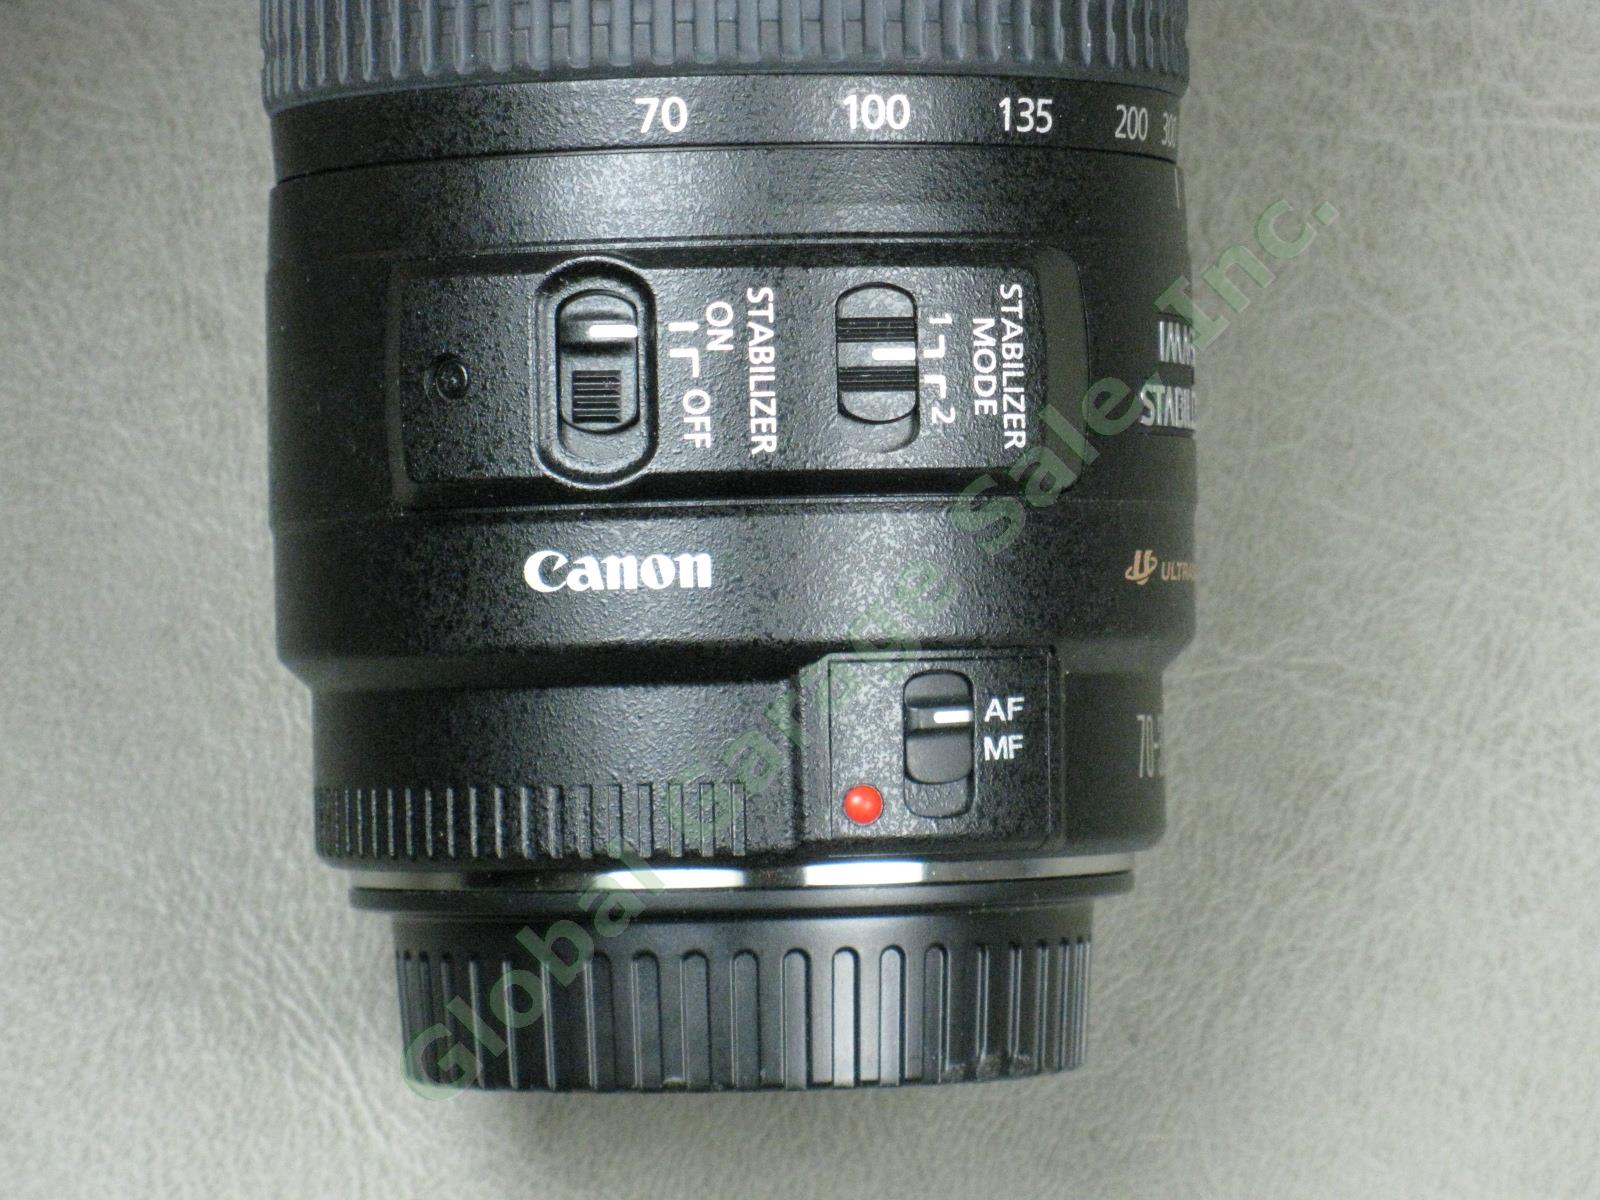 MINT! Canon Ultrasonic 70-300mm Image Stabilizer AF MF Macro Zoom Lens 1:4-5.6 6